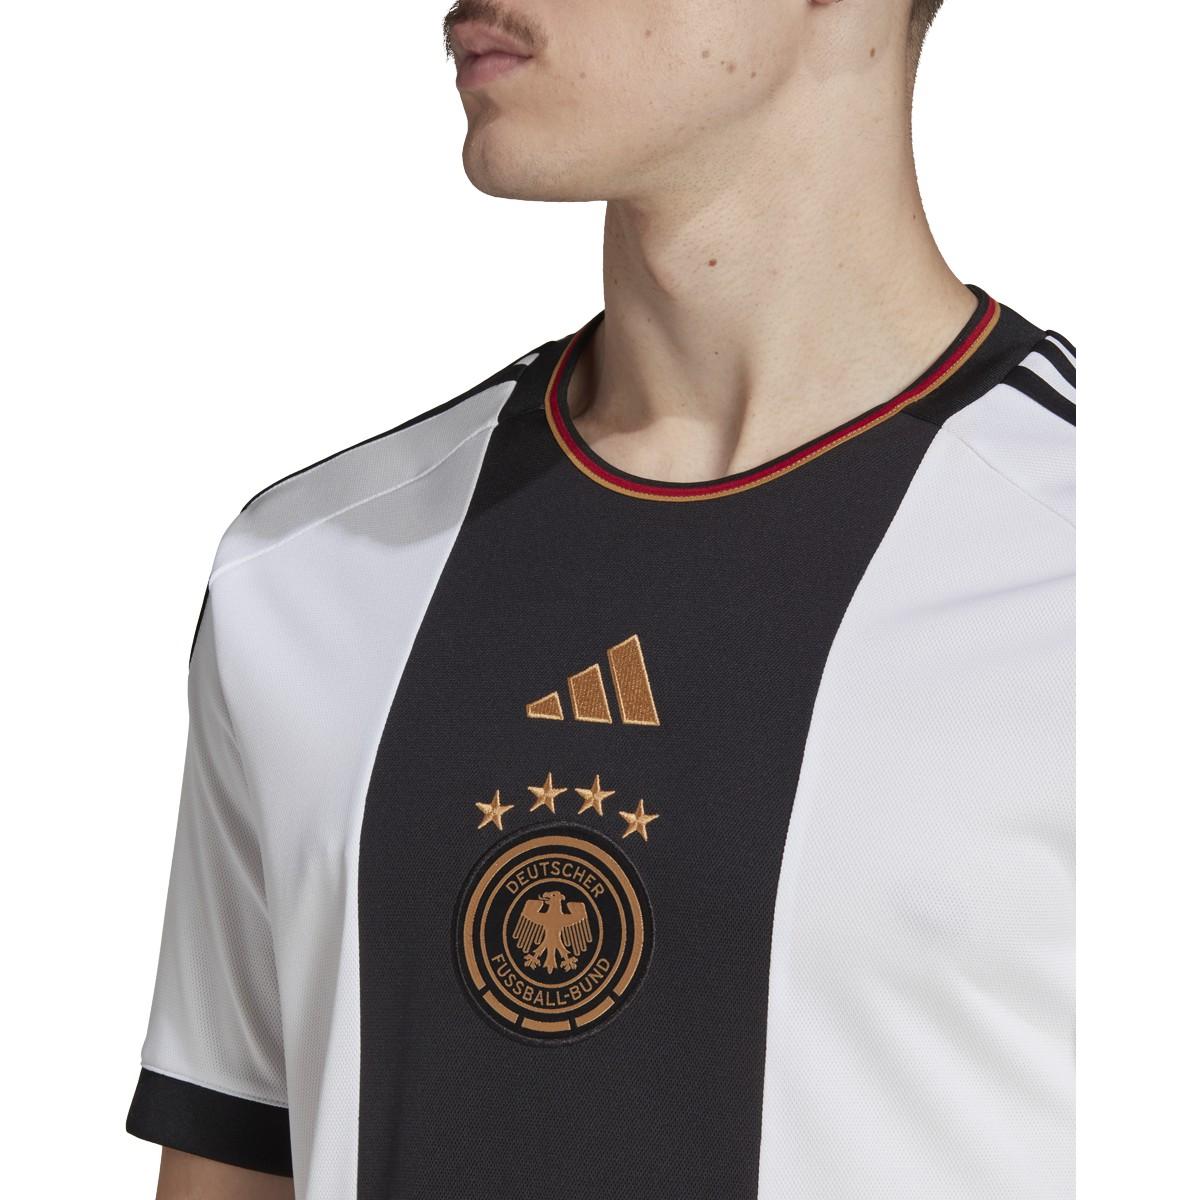 Germany Team Training Jersey Football Shirt Centre Logo Black Adidas Mens  SZ XL